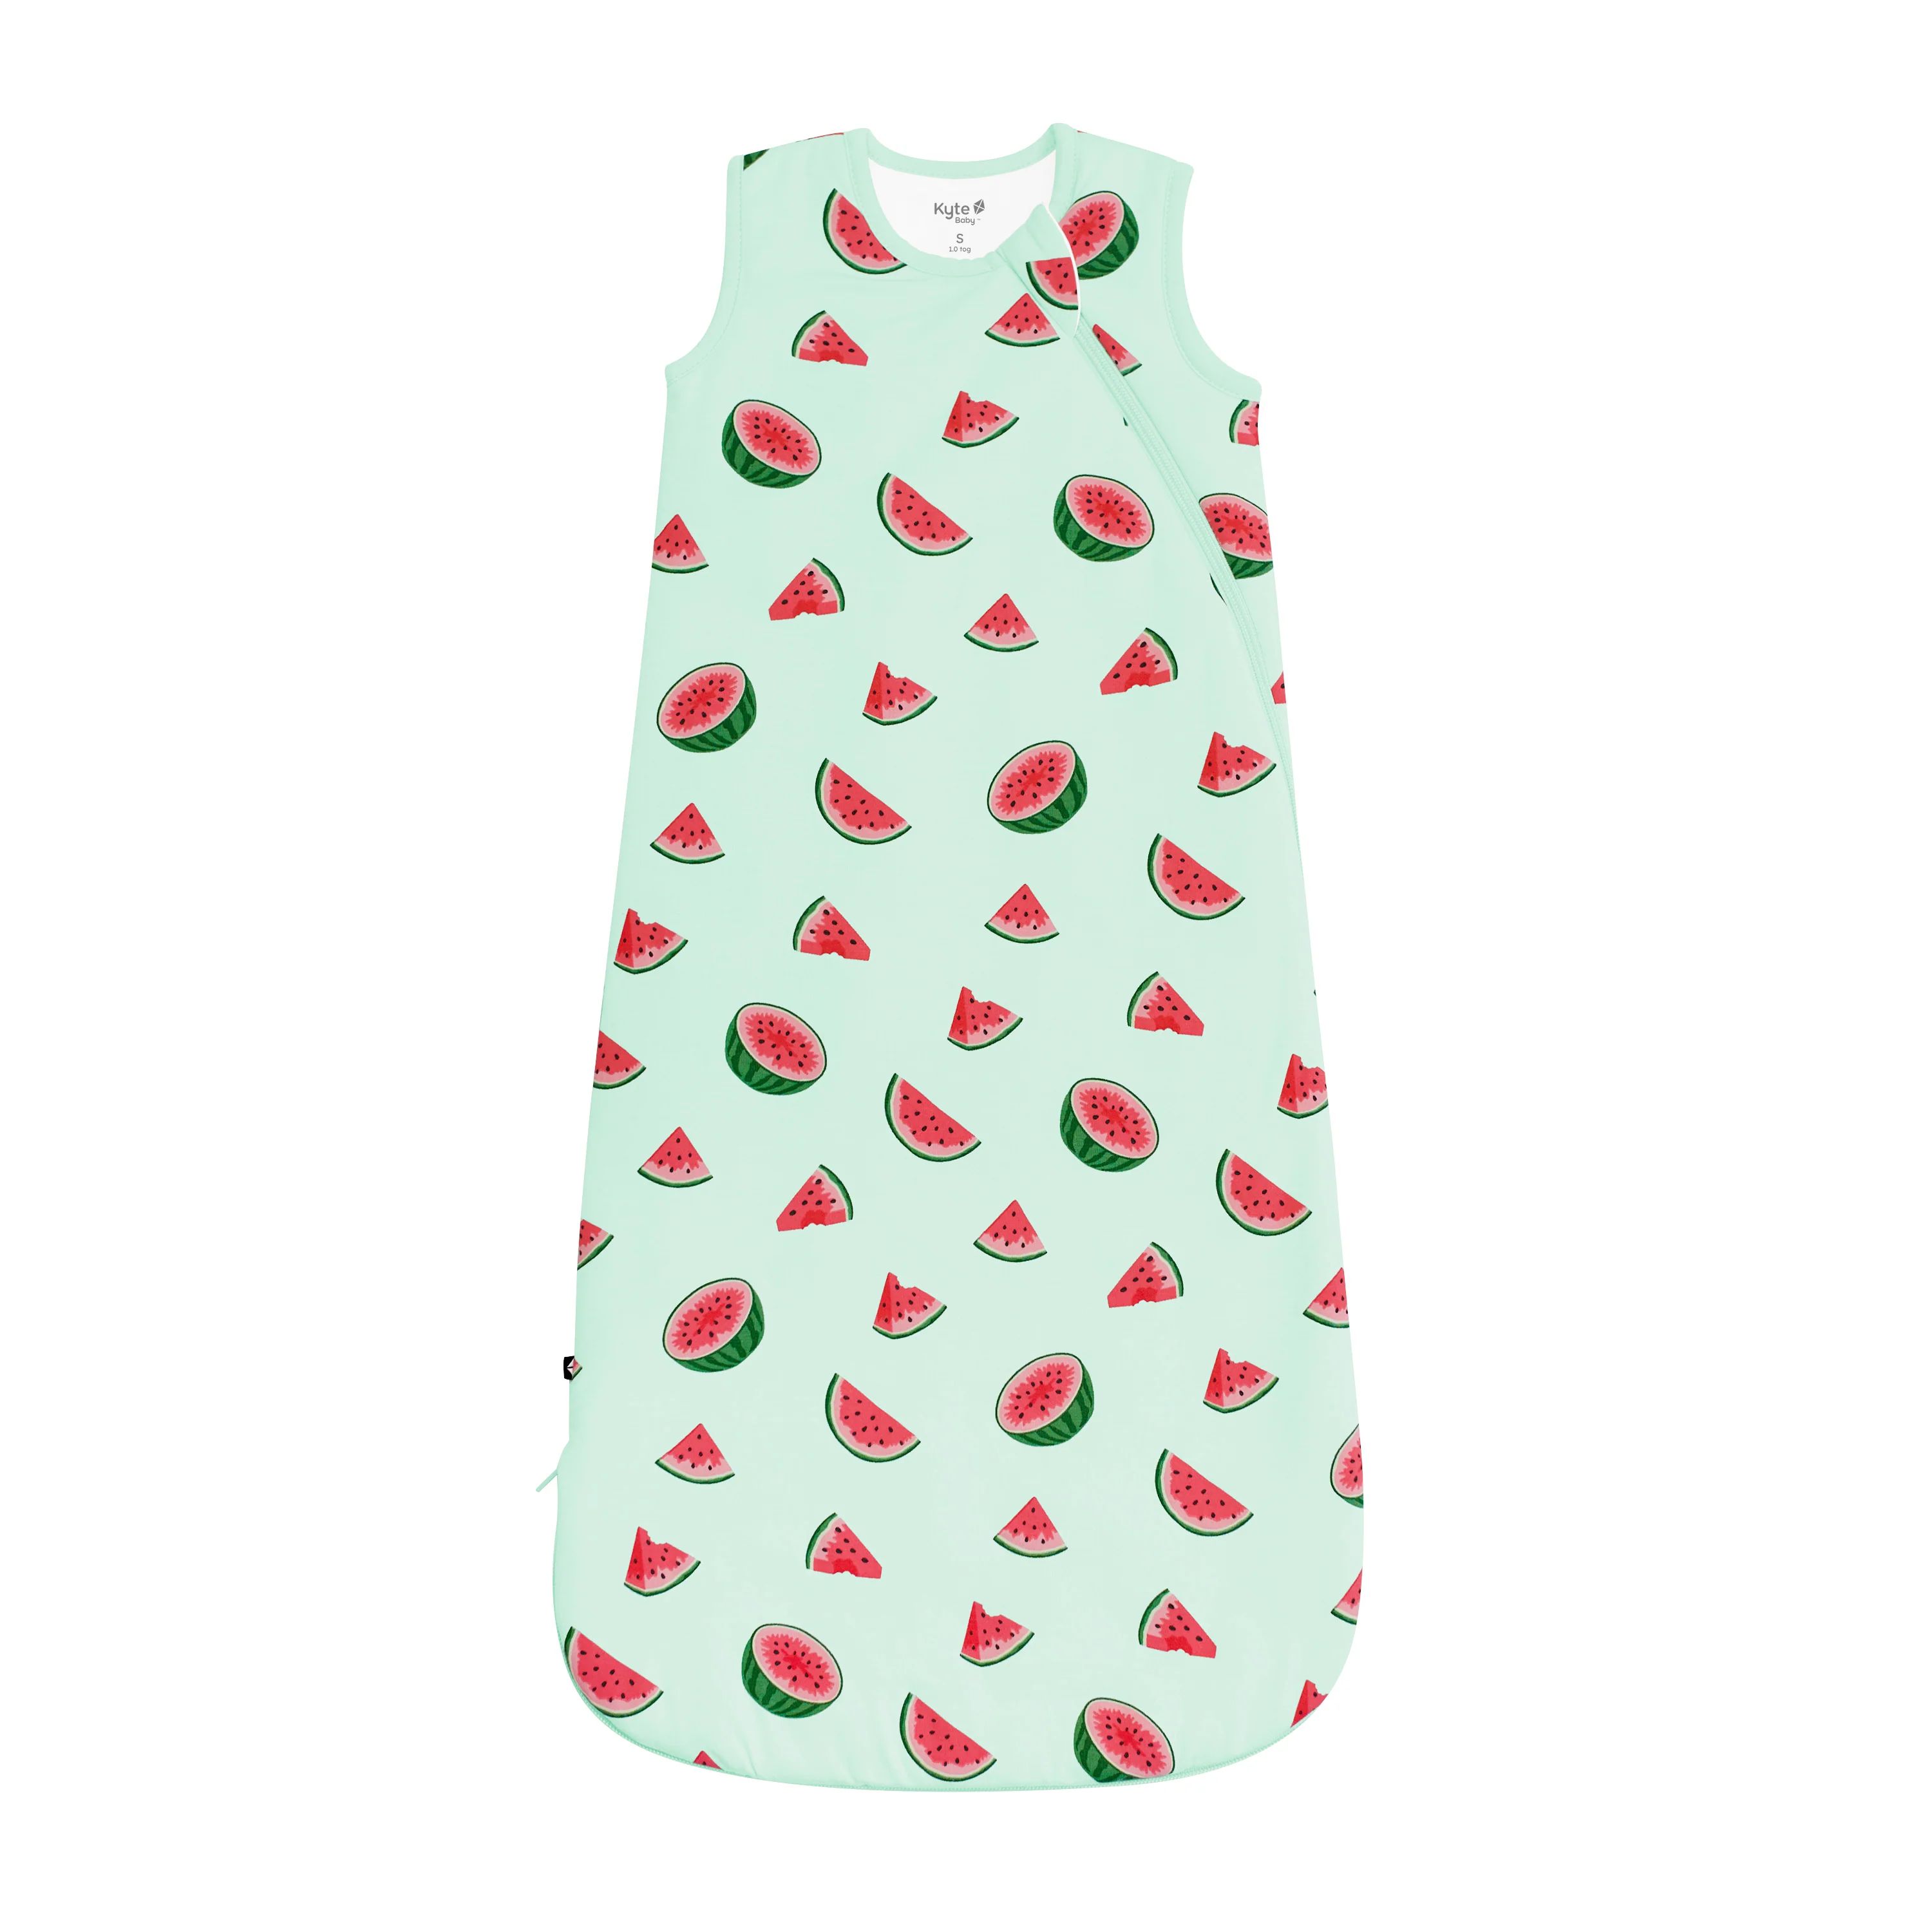 Sleep Bag in Watermelon 1.0 | Kyte BABY